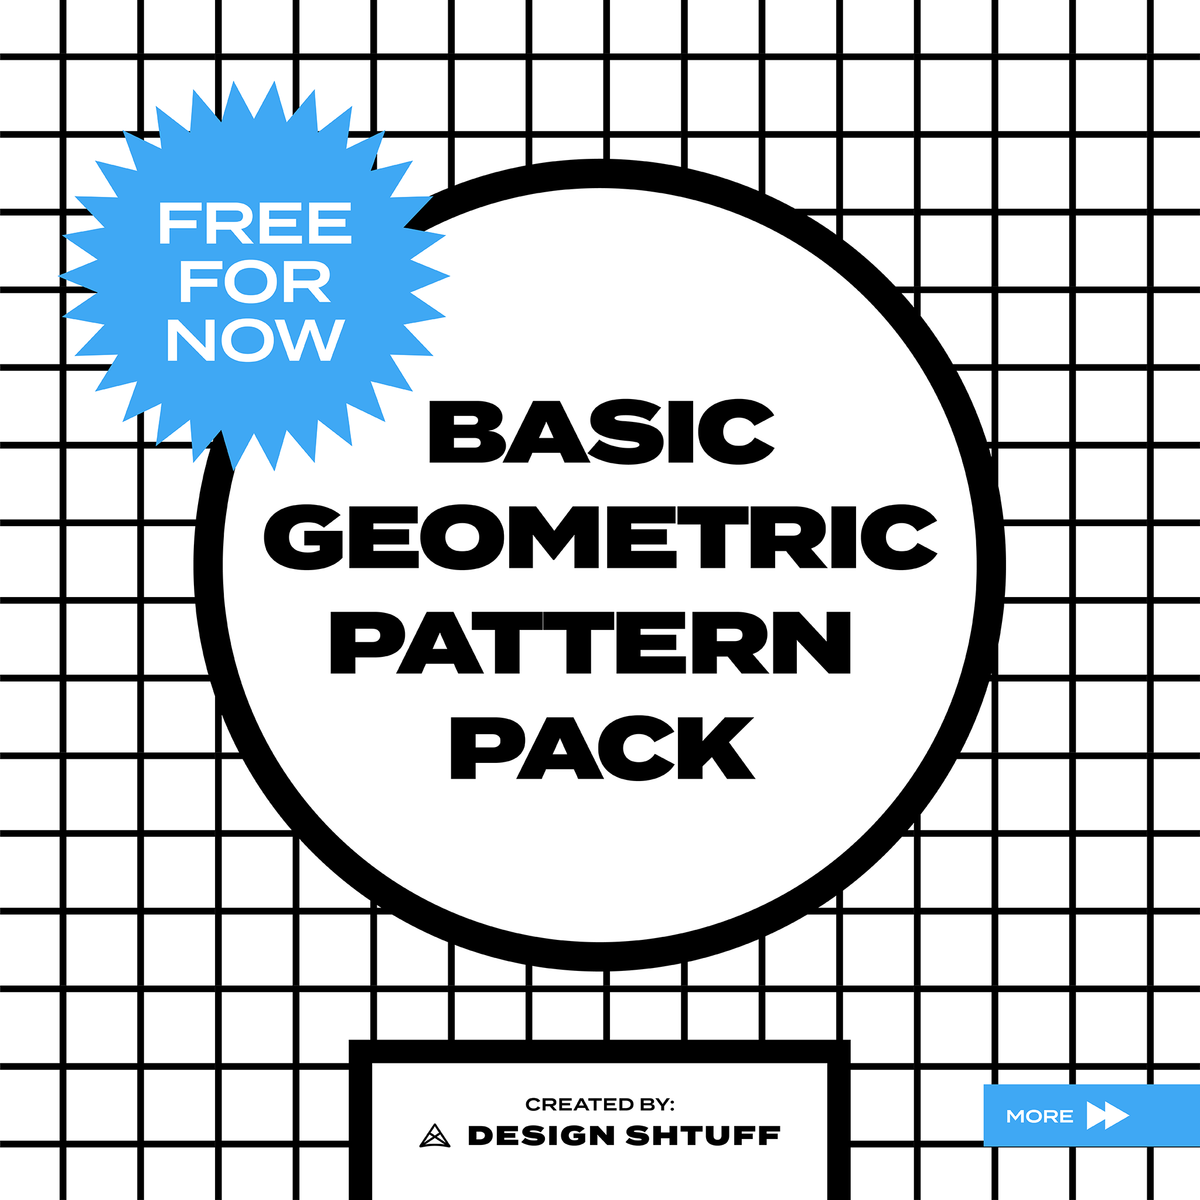 Basic Geometric Pattern Pack